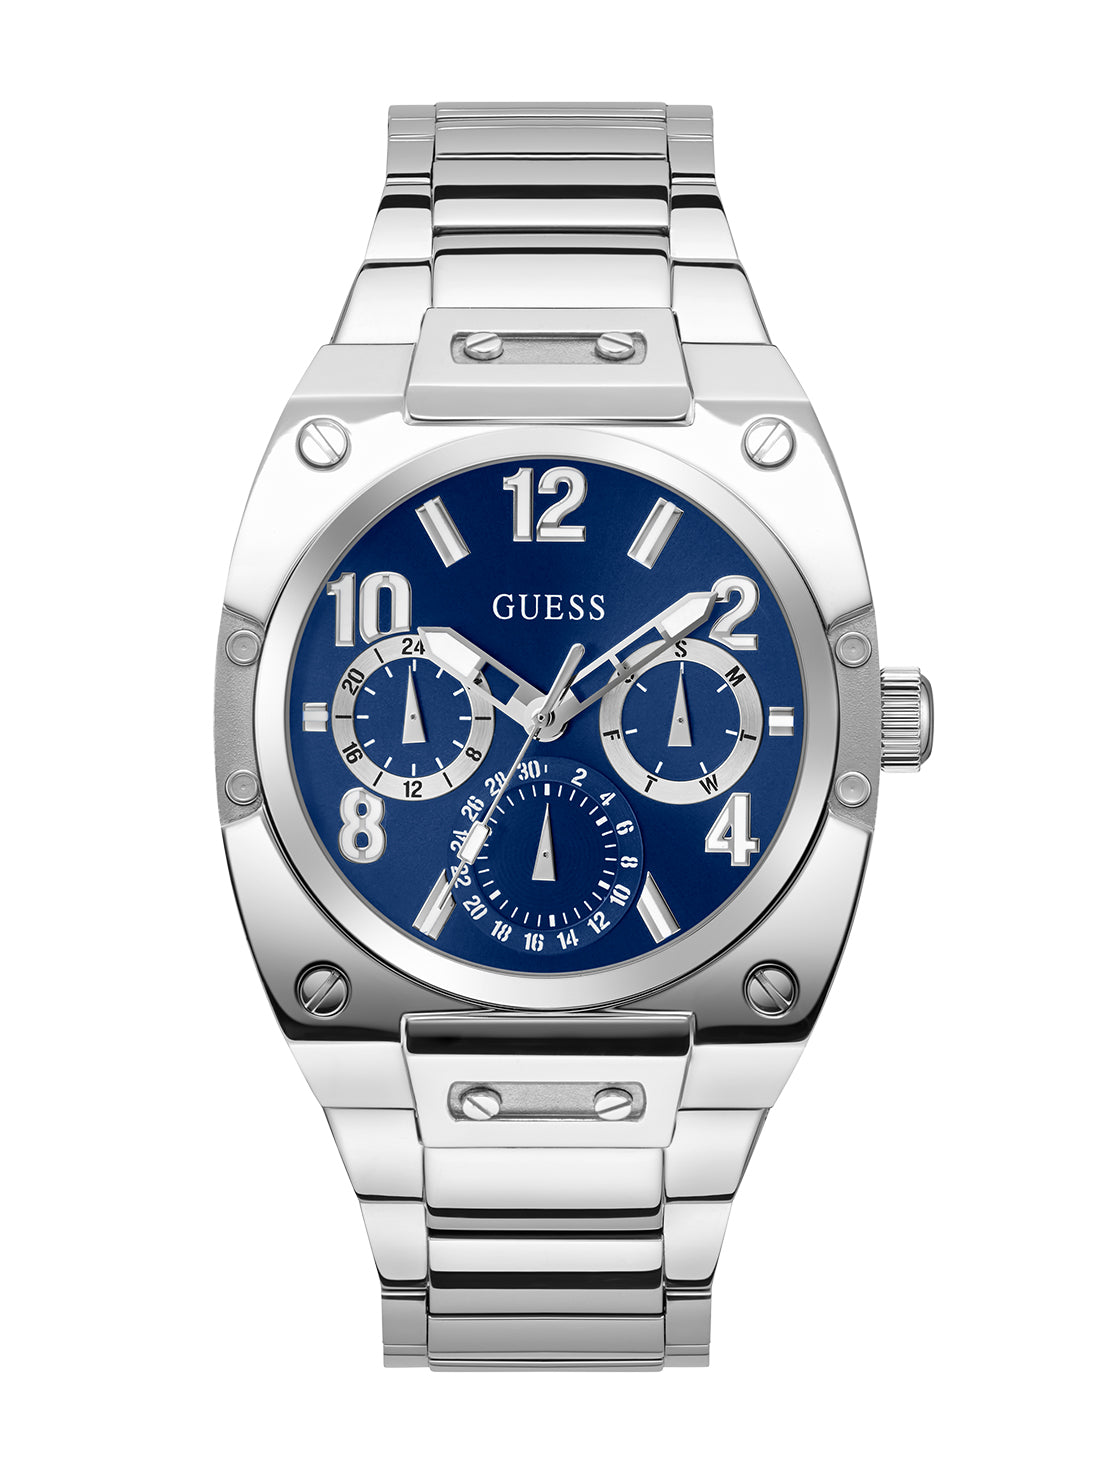 GUESS Men's Silver Blue Prodigy Watch GW0624G1 Front View